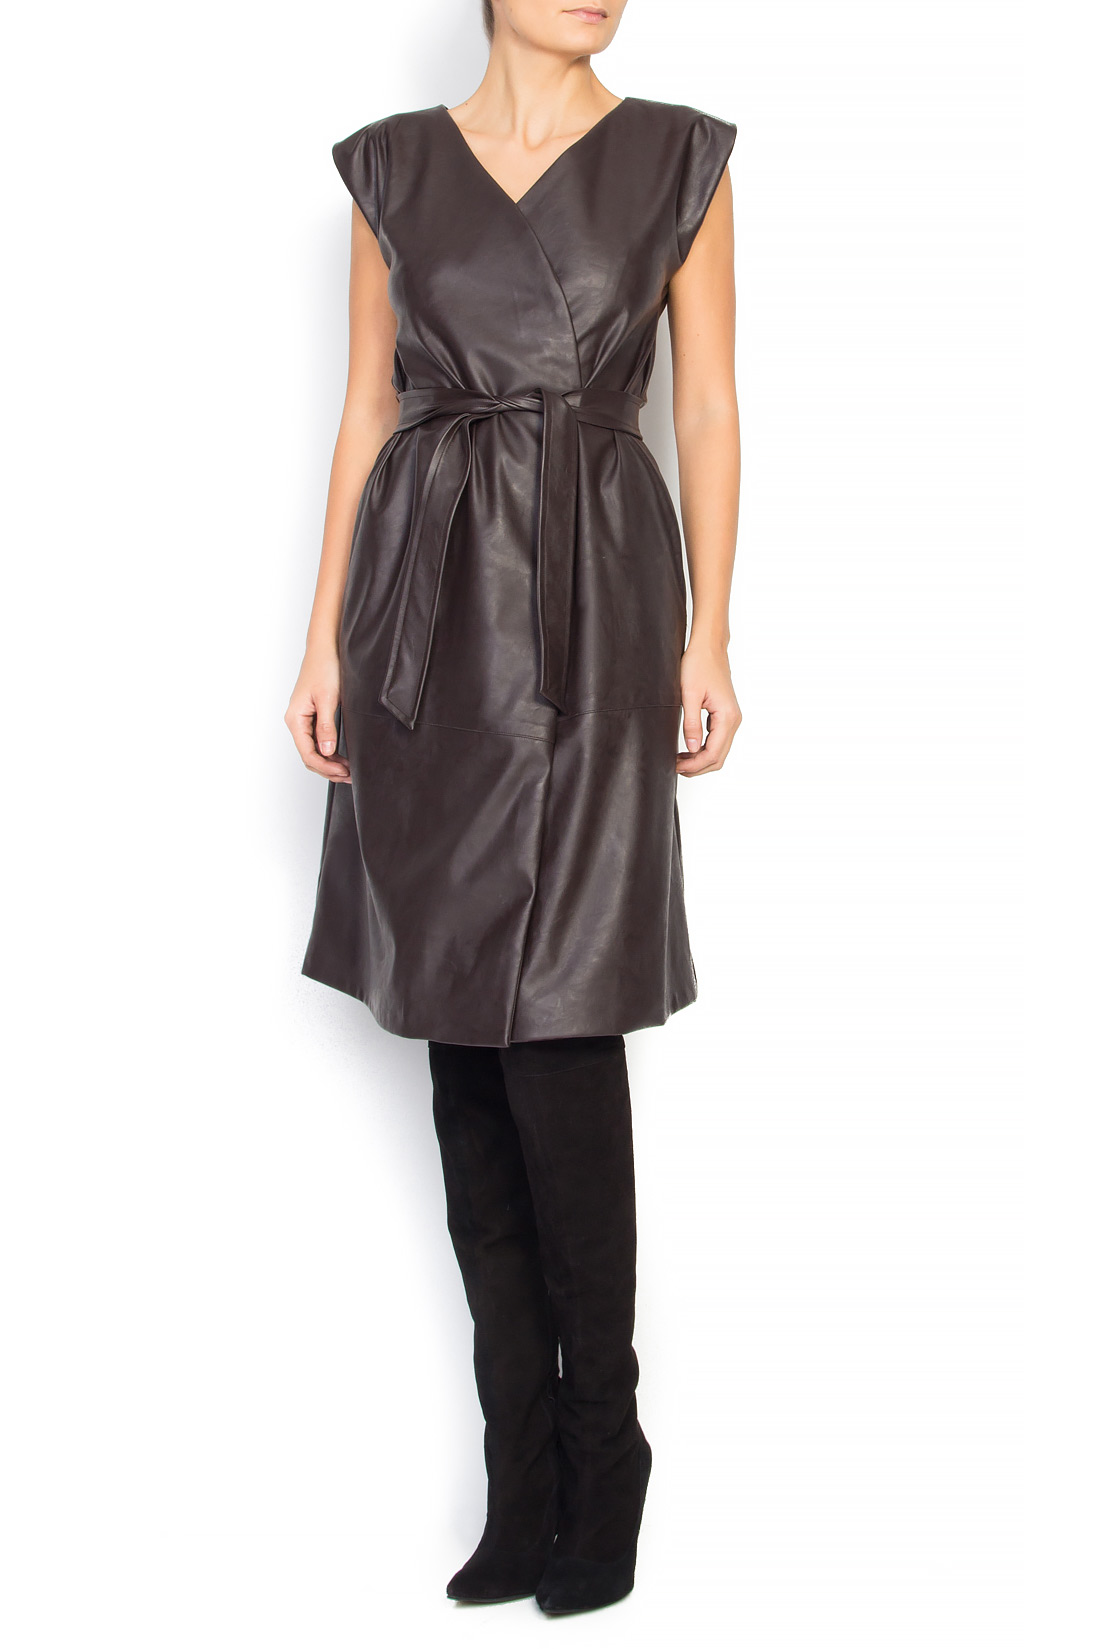 Faux leather wrap dress Lure image 0